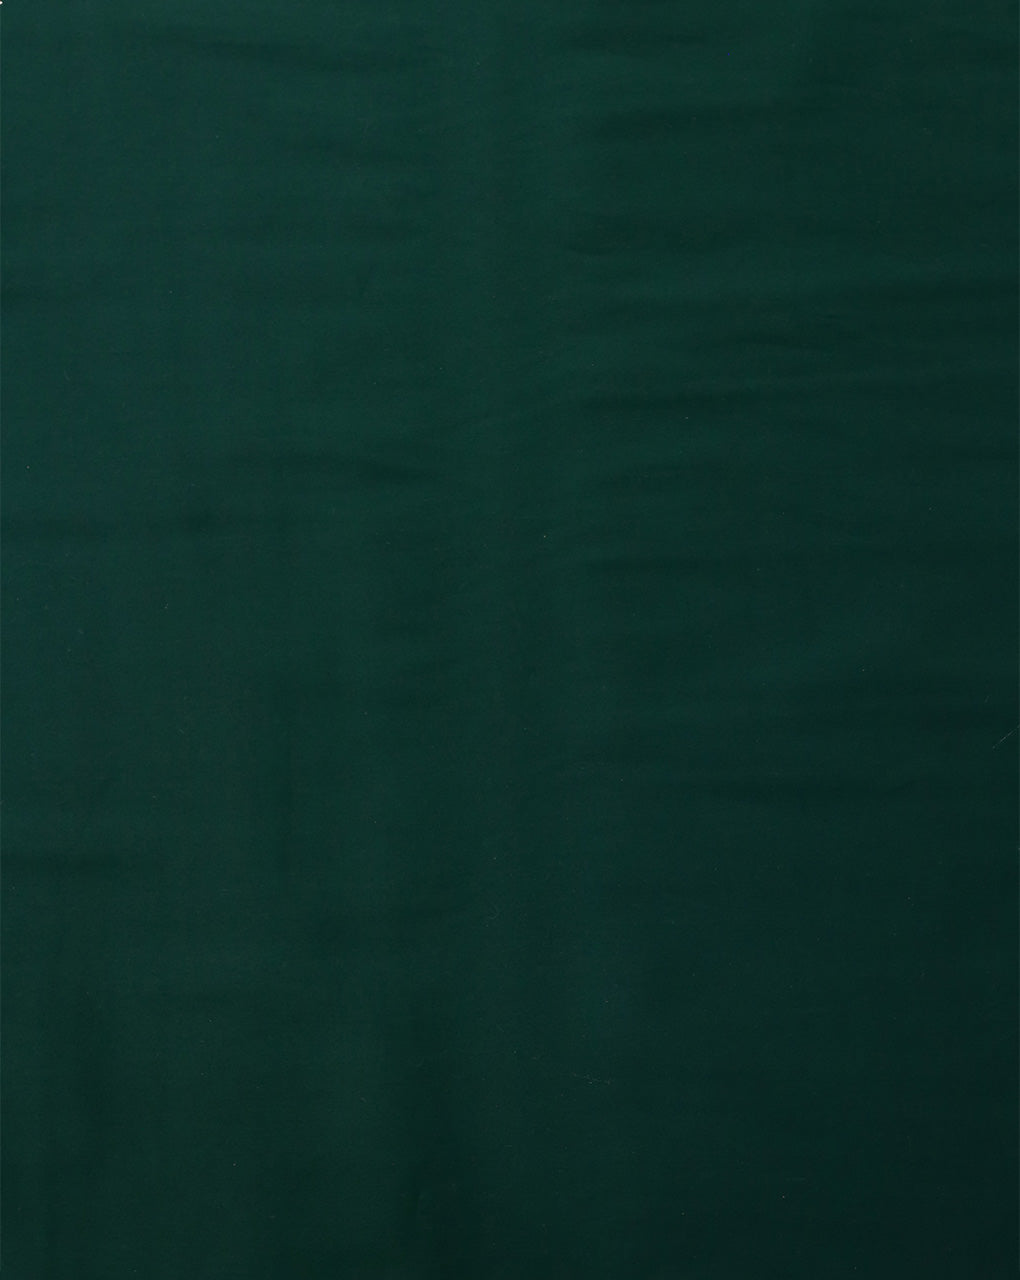 DARK GREEN PLAIN GIZA COTTON FABRIC (WIDTH - 58 INCHES